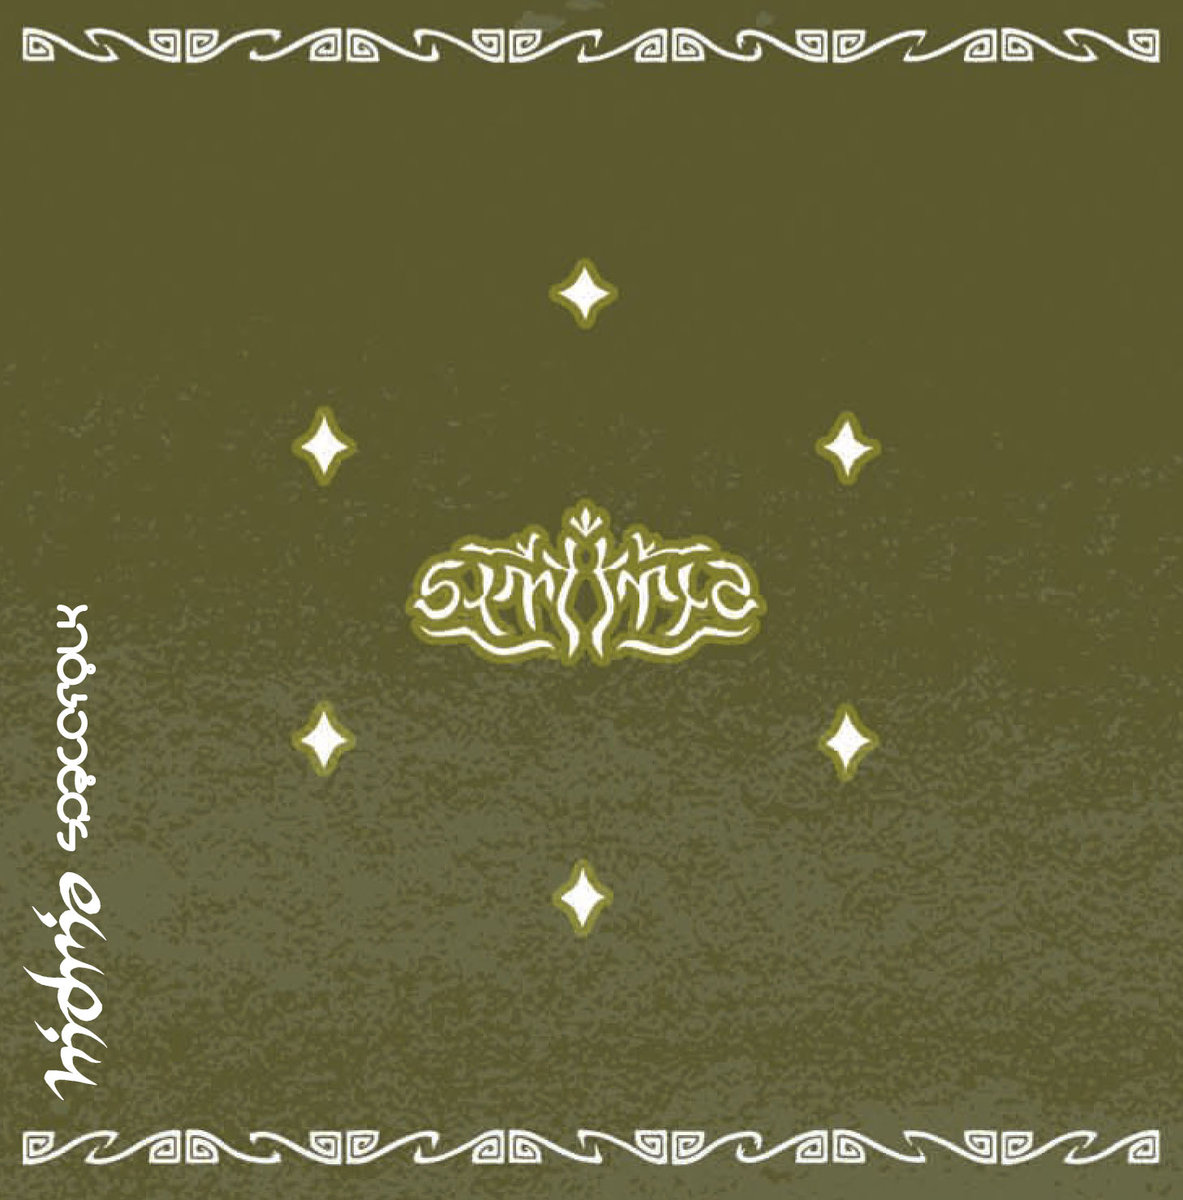 Hidria Spacefolk - Sine @ 'Symetria' album (alternative, astrobeat)